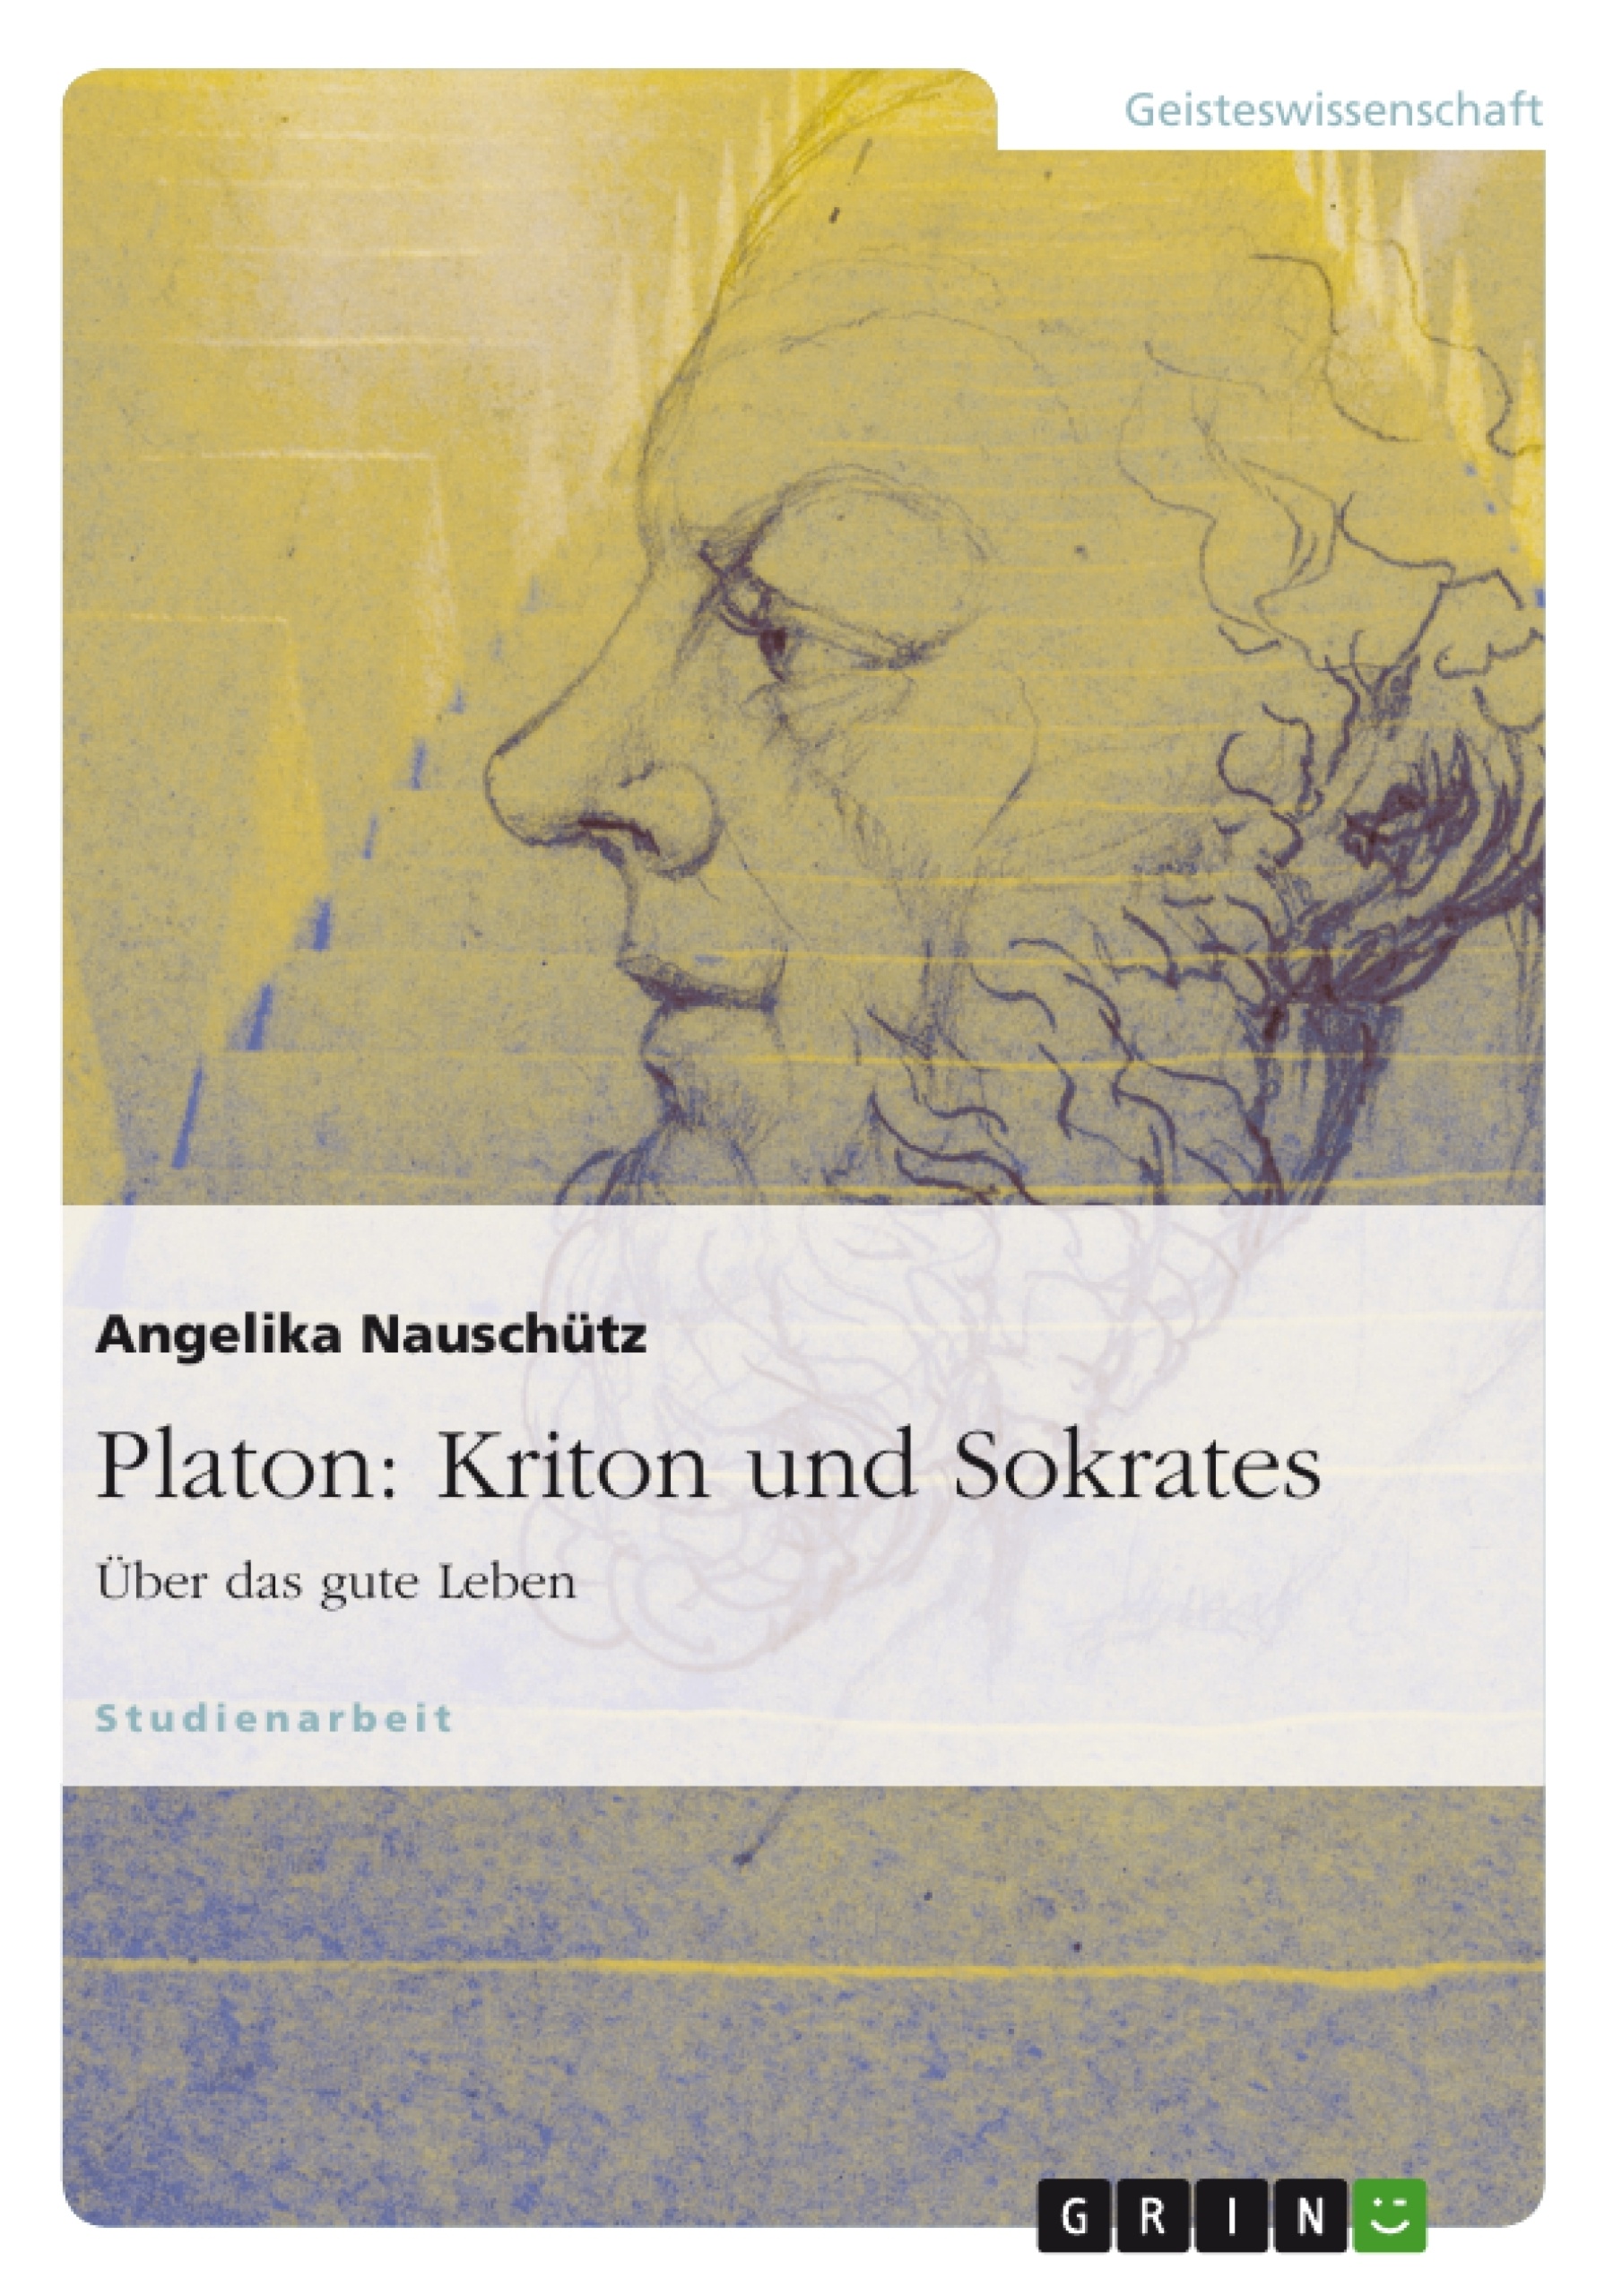 Titre: Platon: Kriton und Sokrates